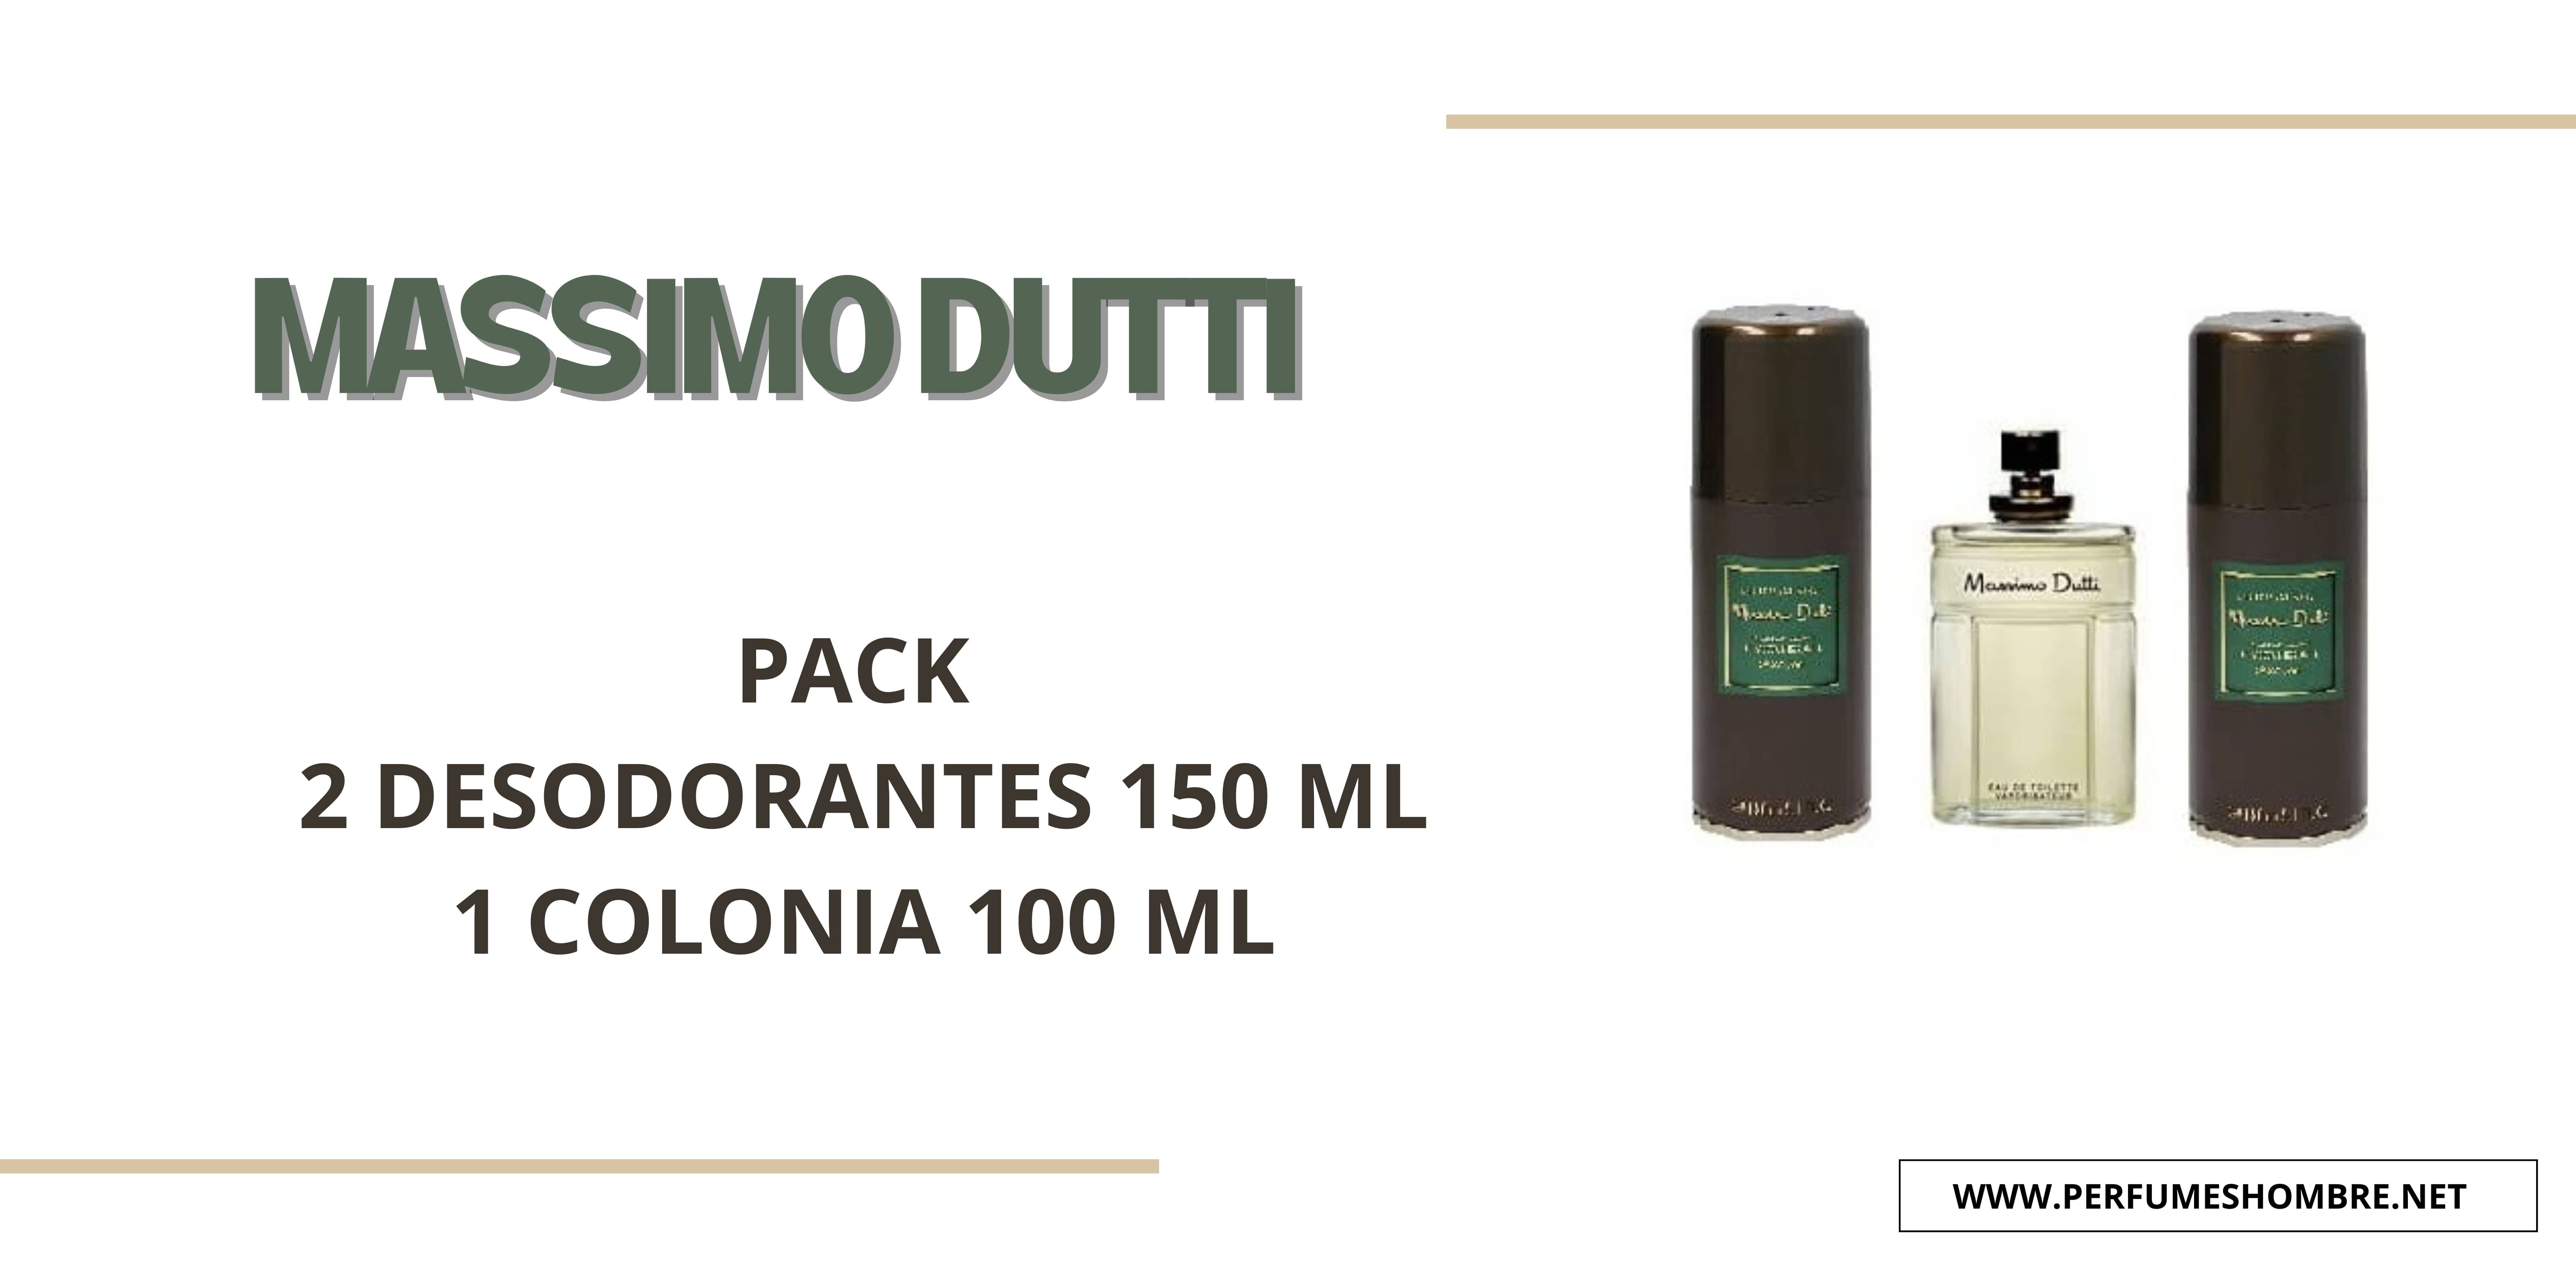 Pack Perfume y Desodorantes Massimo Dutti